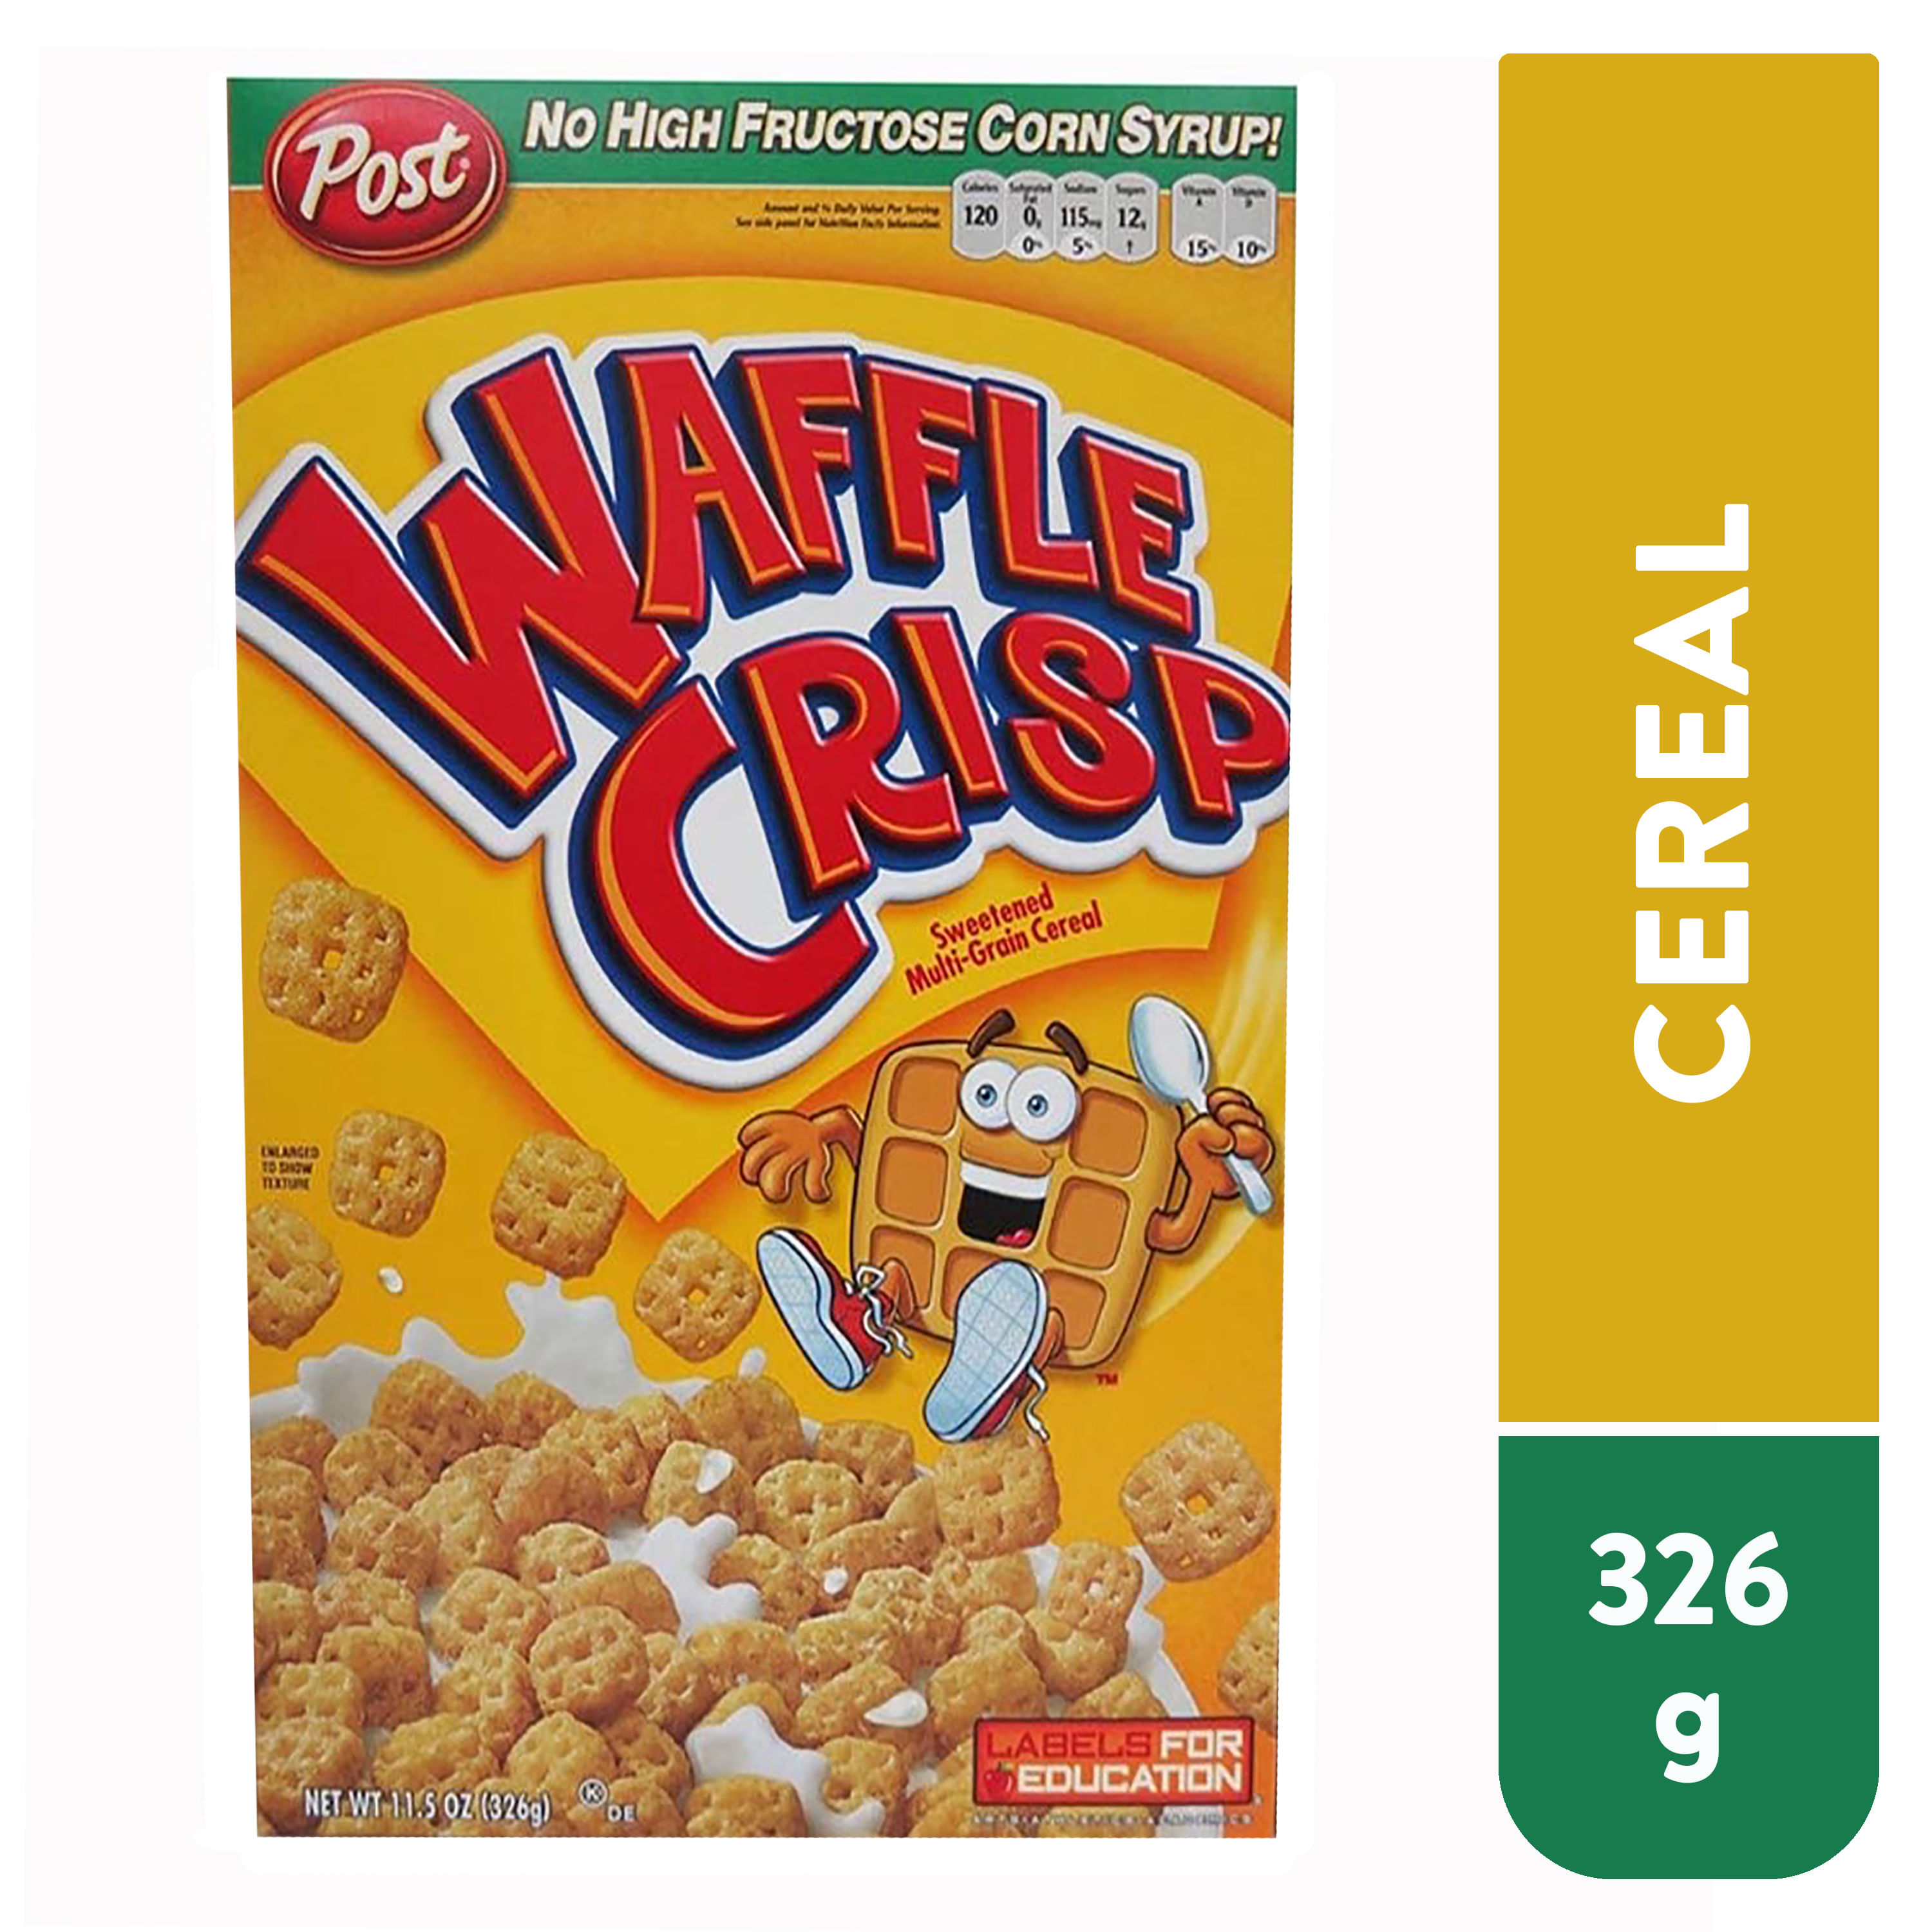 Comprar Cereales Americanos Post Waffle Crisp Online